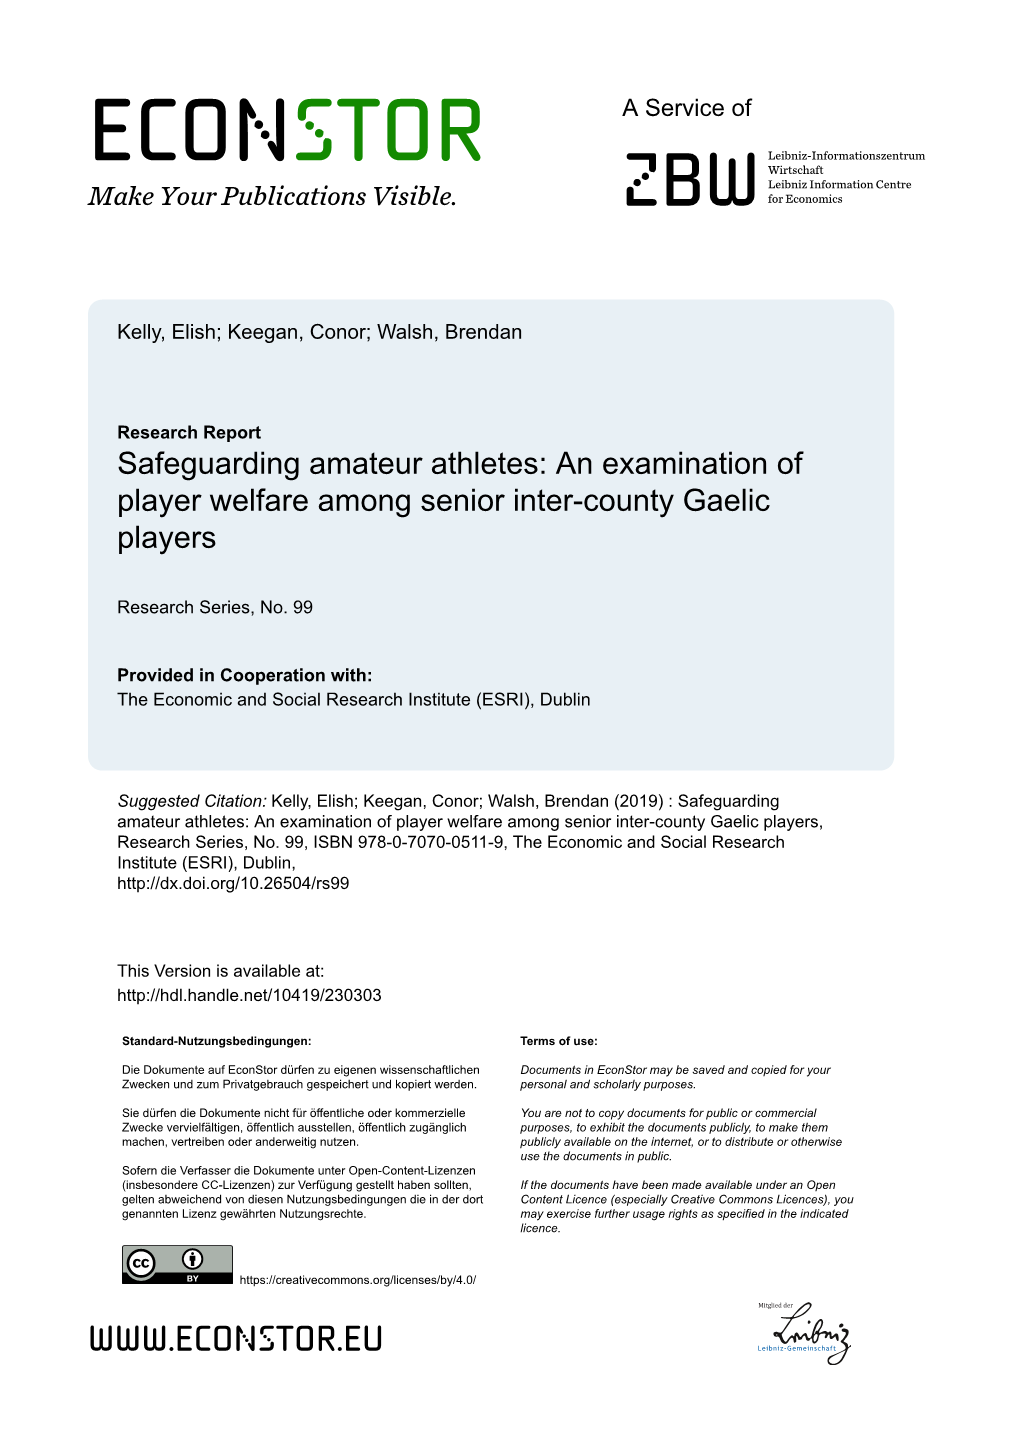 Safeguarding Amateur Athletes: an Examination of Player Welfare Among Senior Inter-County Gaelic Players